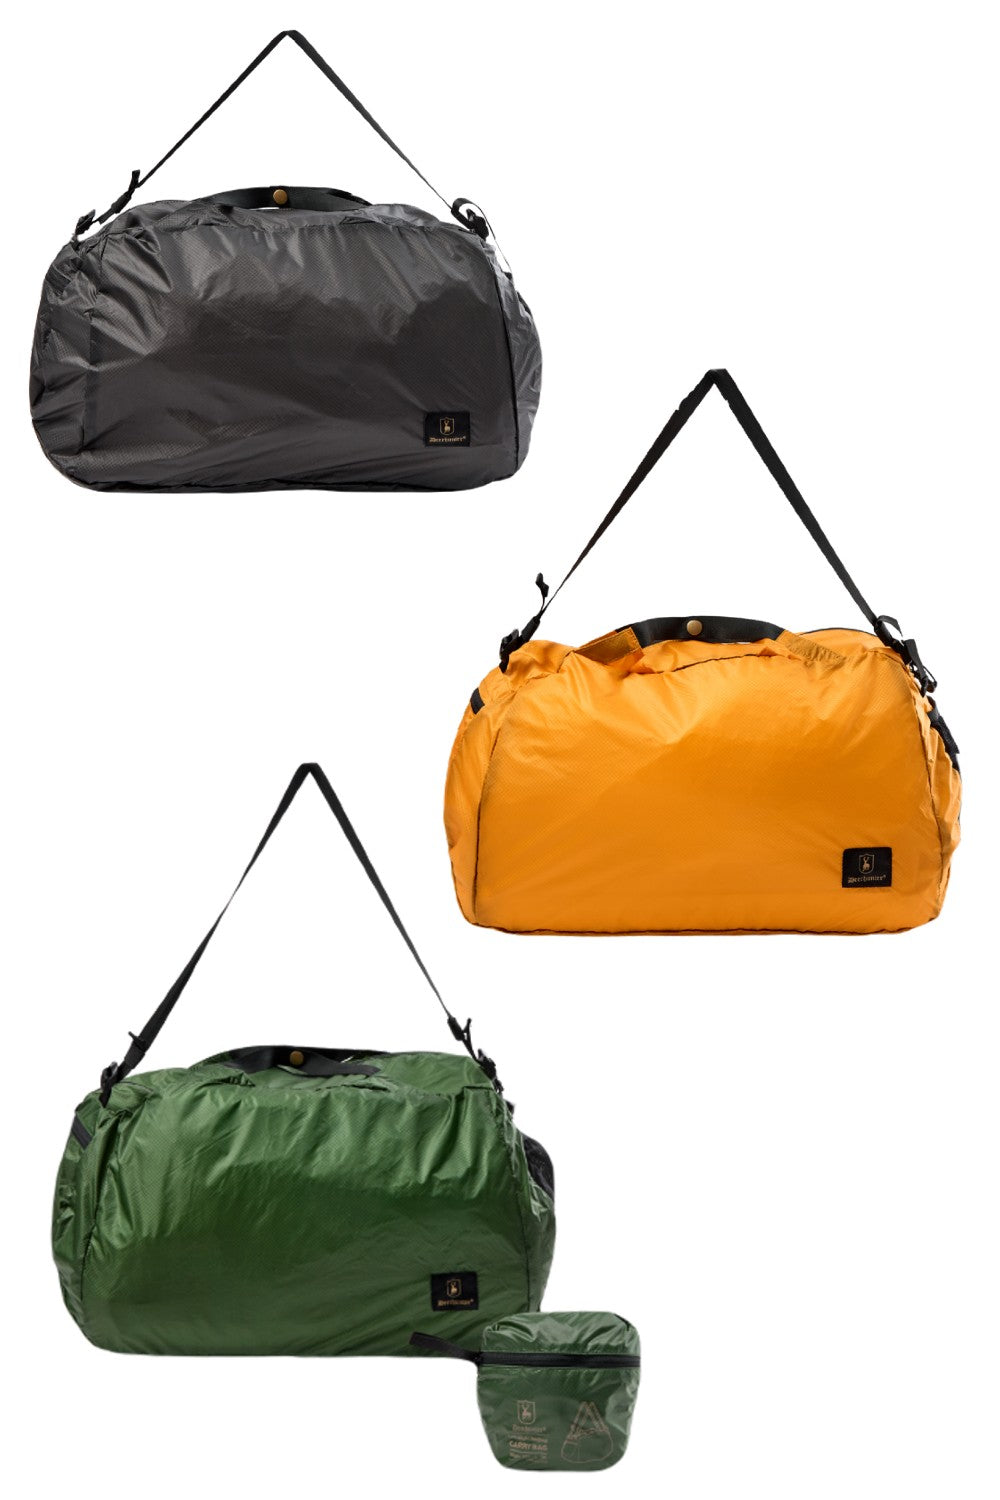 Deerhunter Packable Carry Bag 32L In Black, Yellow, Green